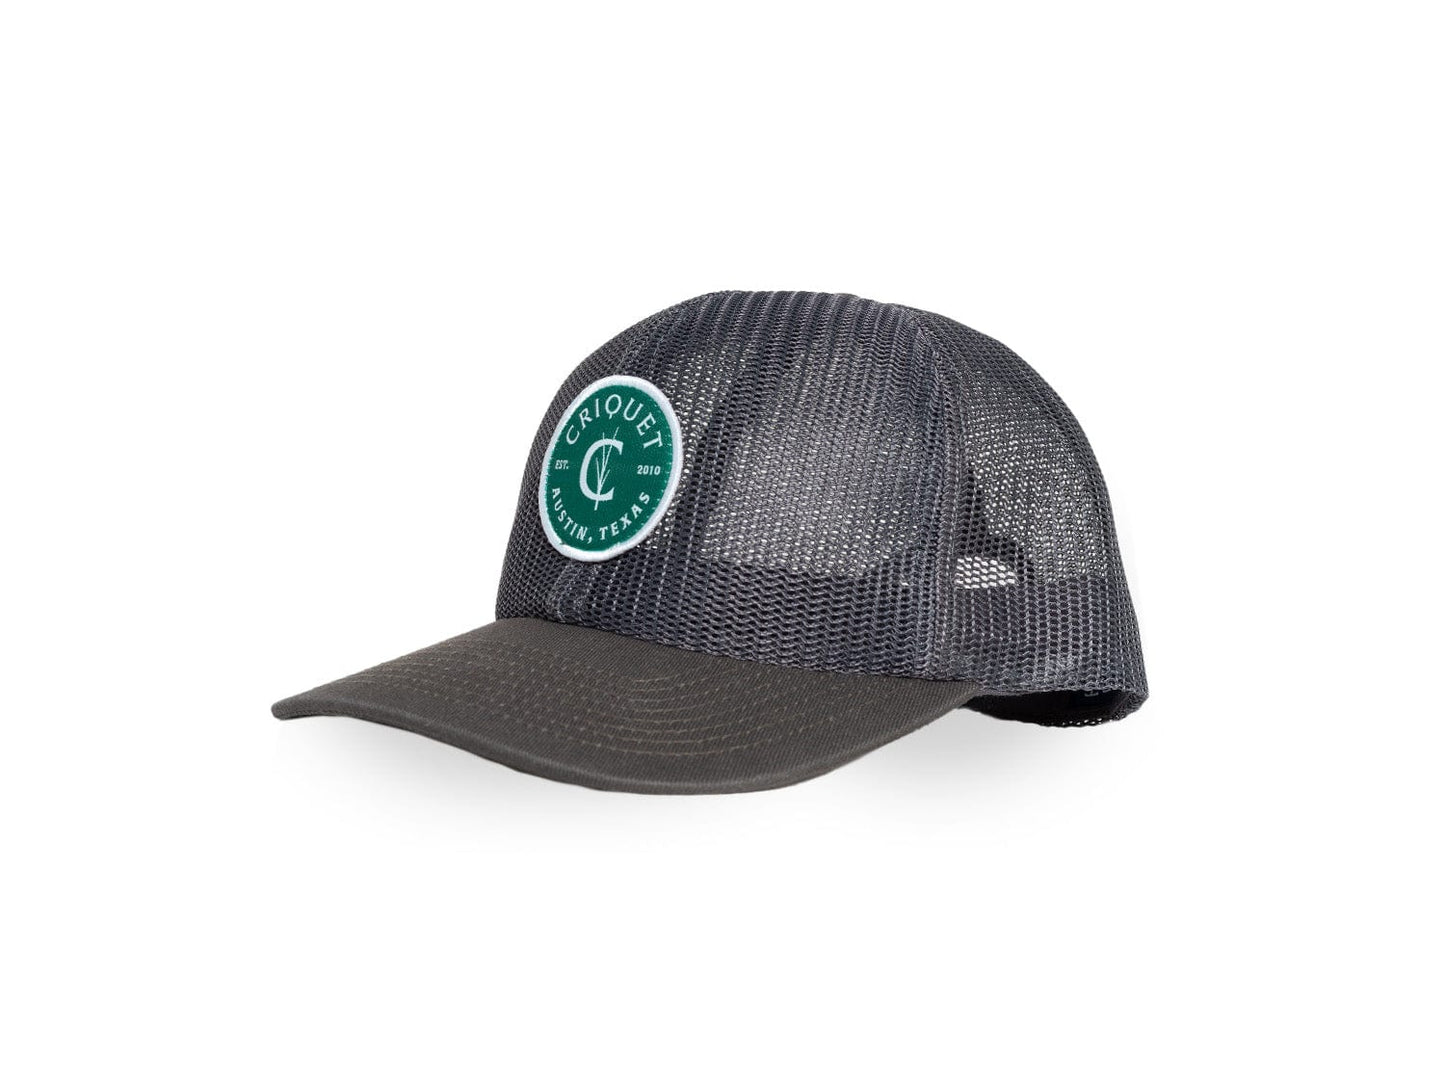 All Mesh Trucker Hat - Criquet Badge - Gray